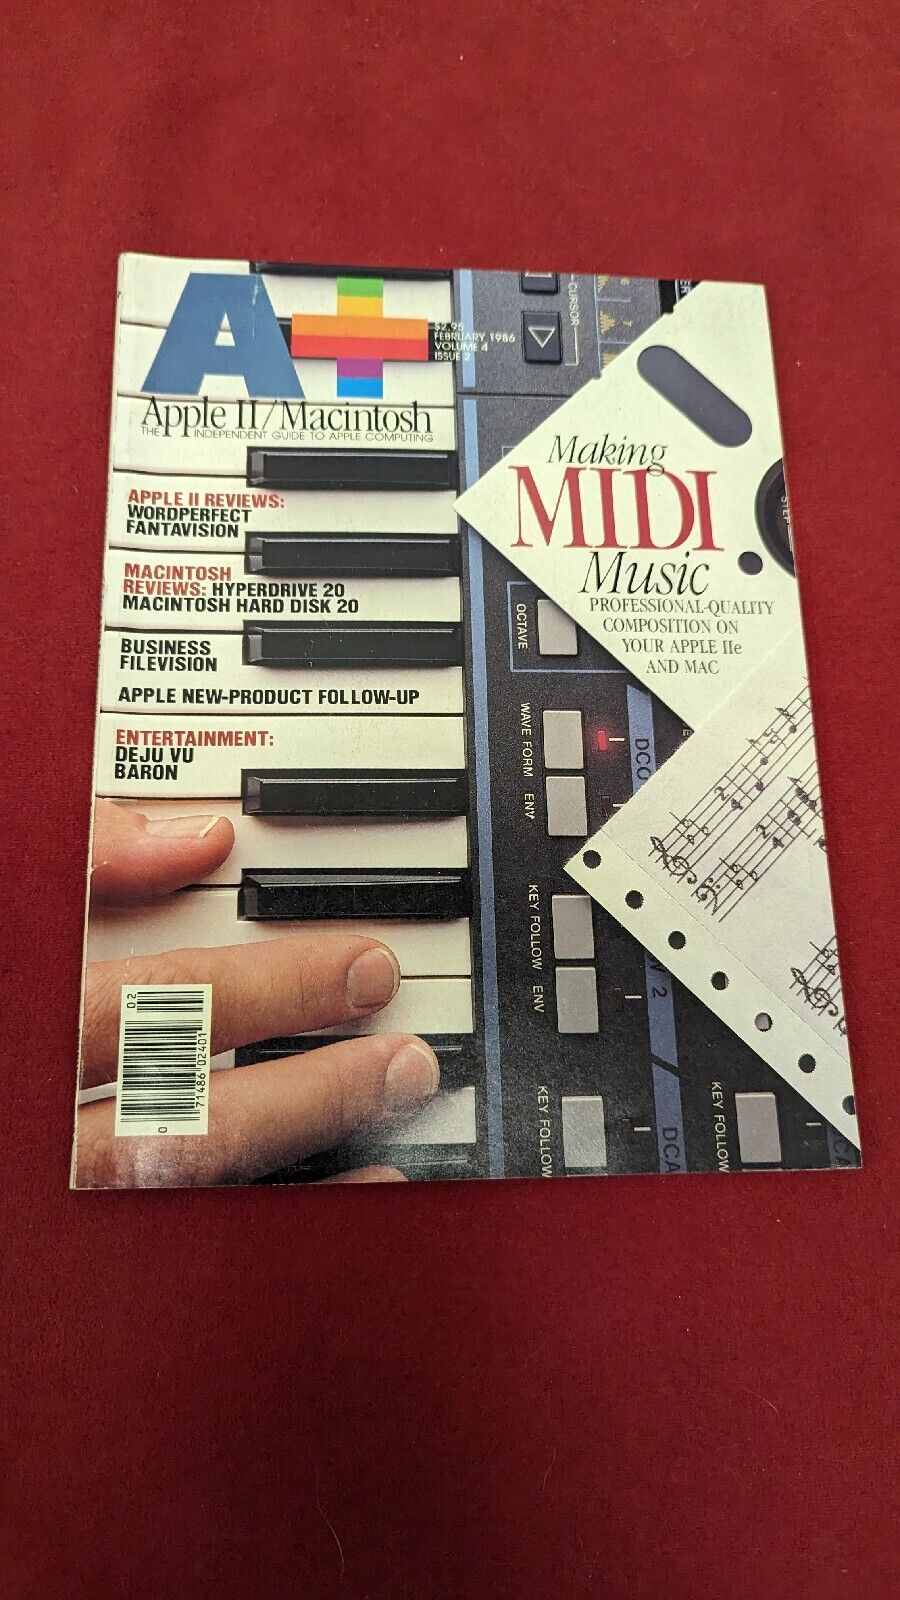 A+ Magazine 1986 Volume 4 Issue 2 February Apple II Macintosh Computing